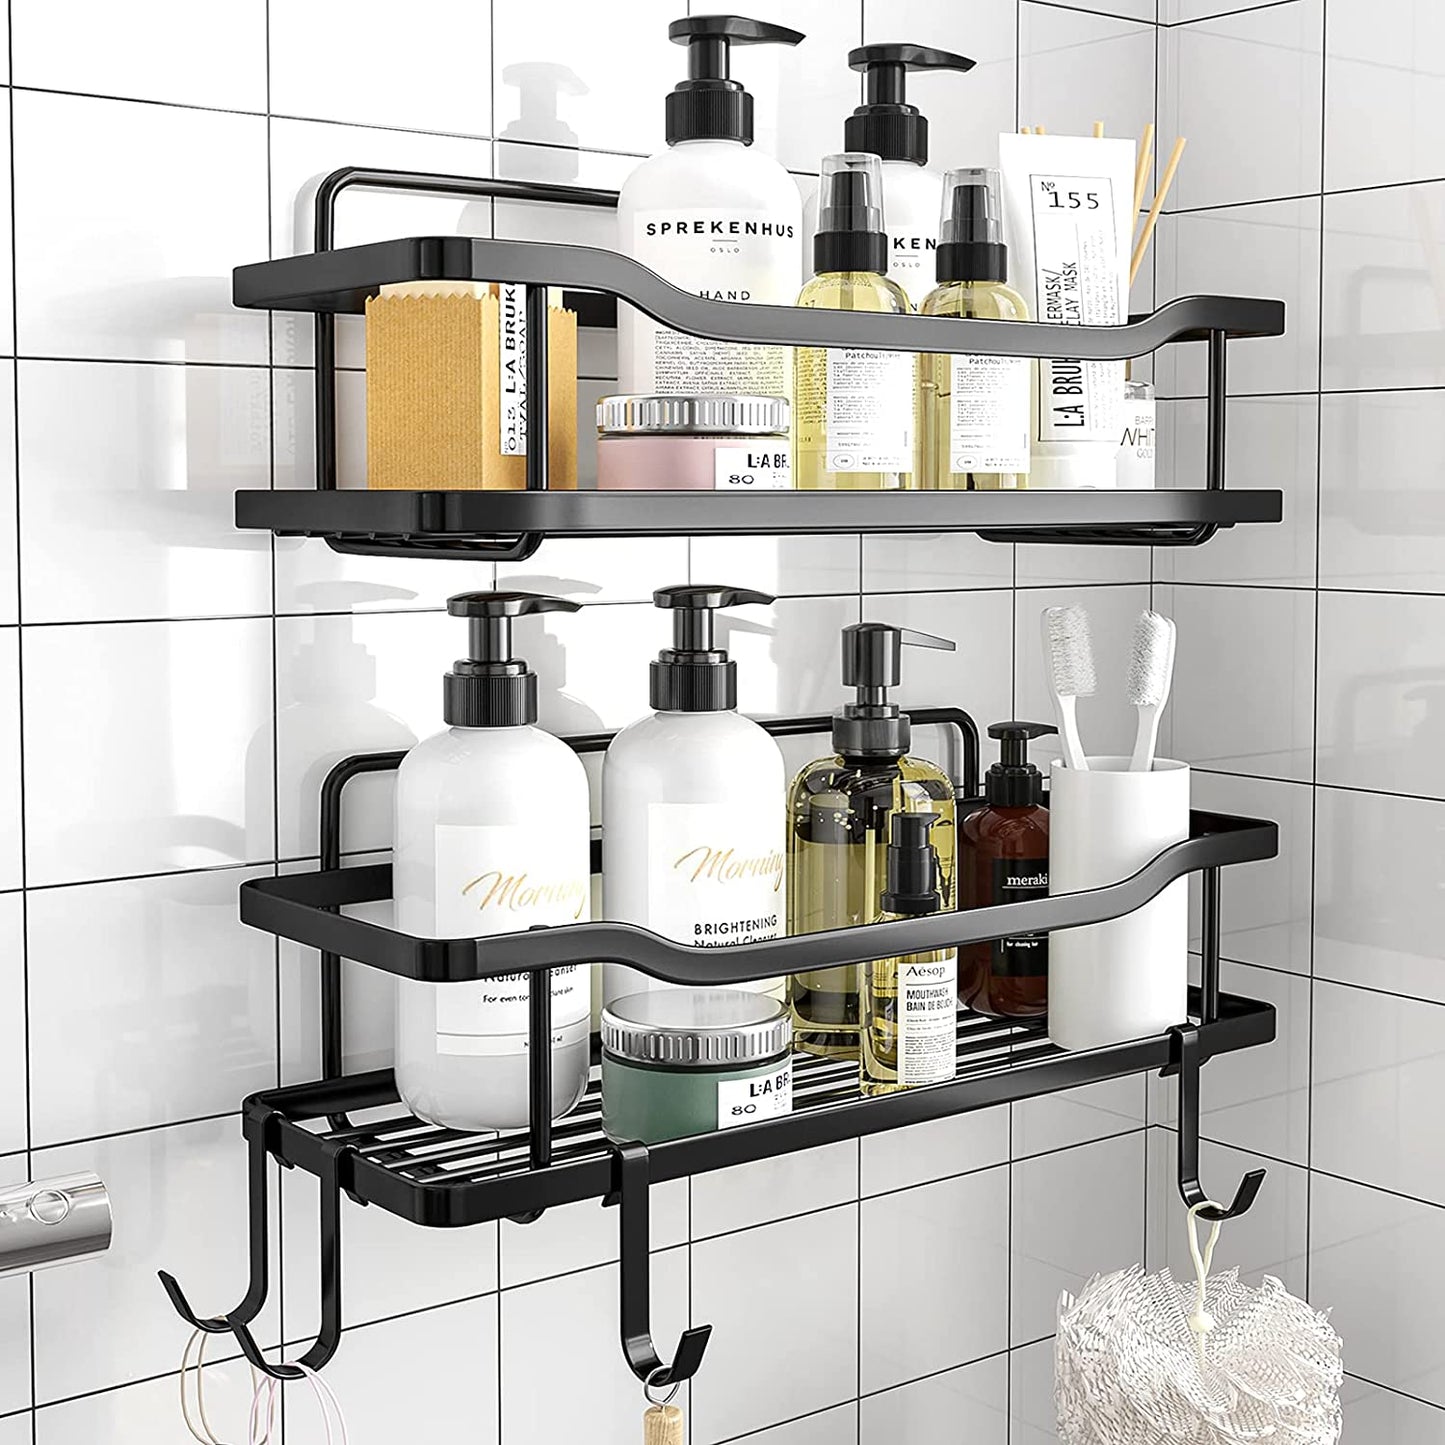 2-Pack Adhesive Shower Caddy, Shower Shelf, No Drilling Rustproof Stainless Steel OMAIRA Shower Organizer for Inside Shower & Kitchen Storage (Matte Black)